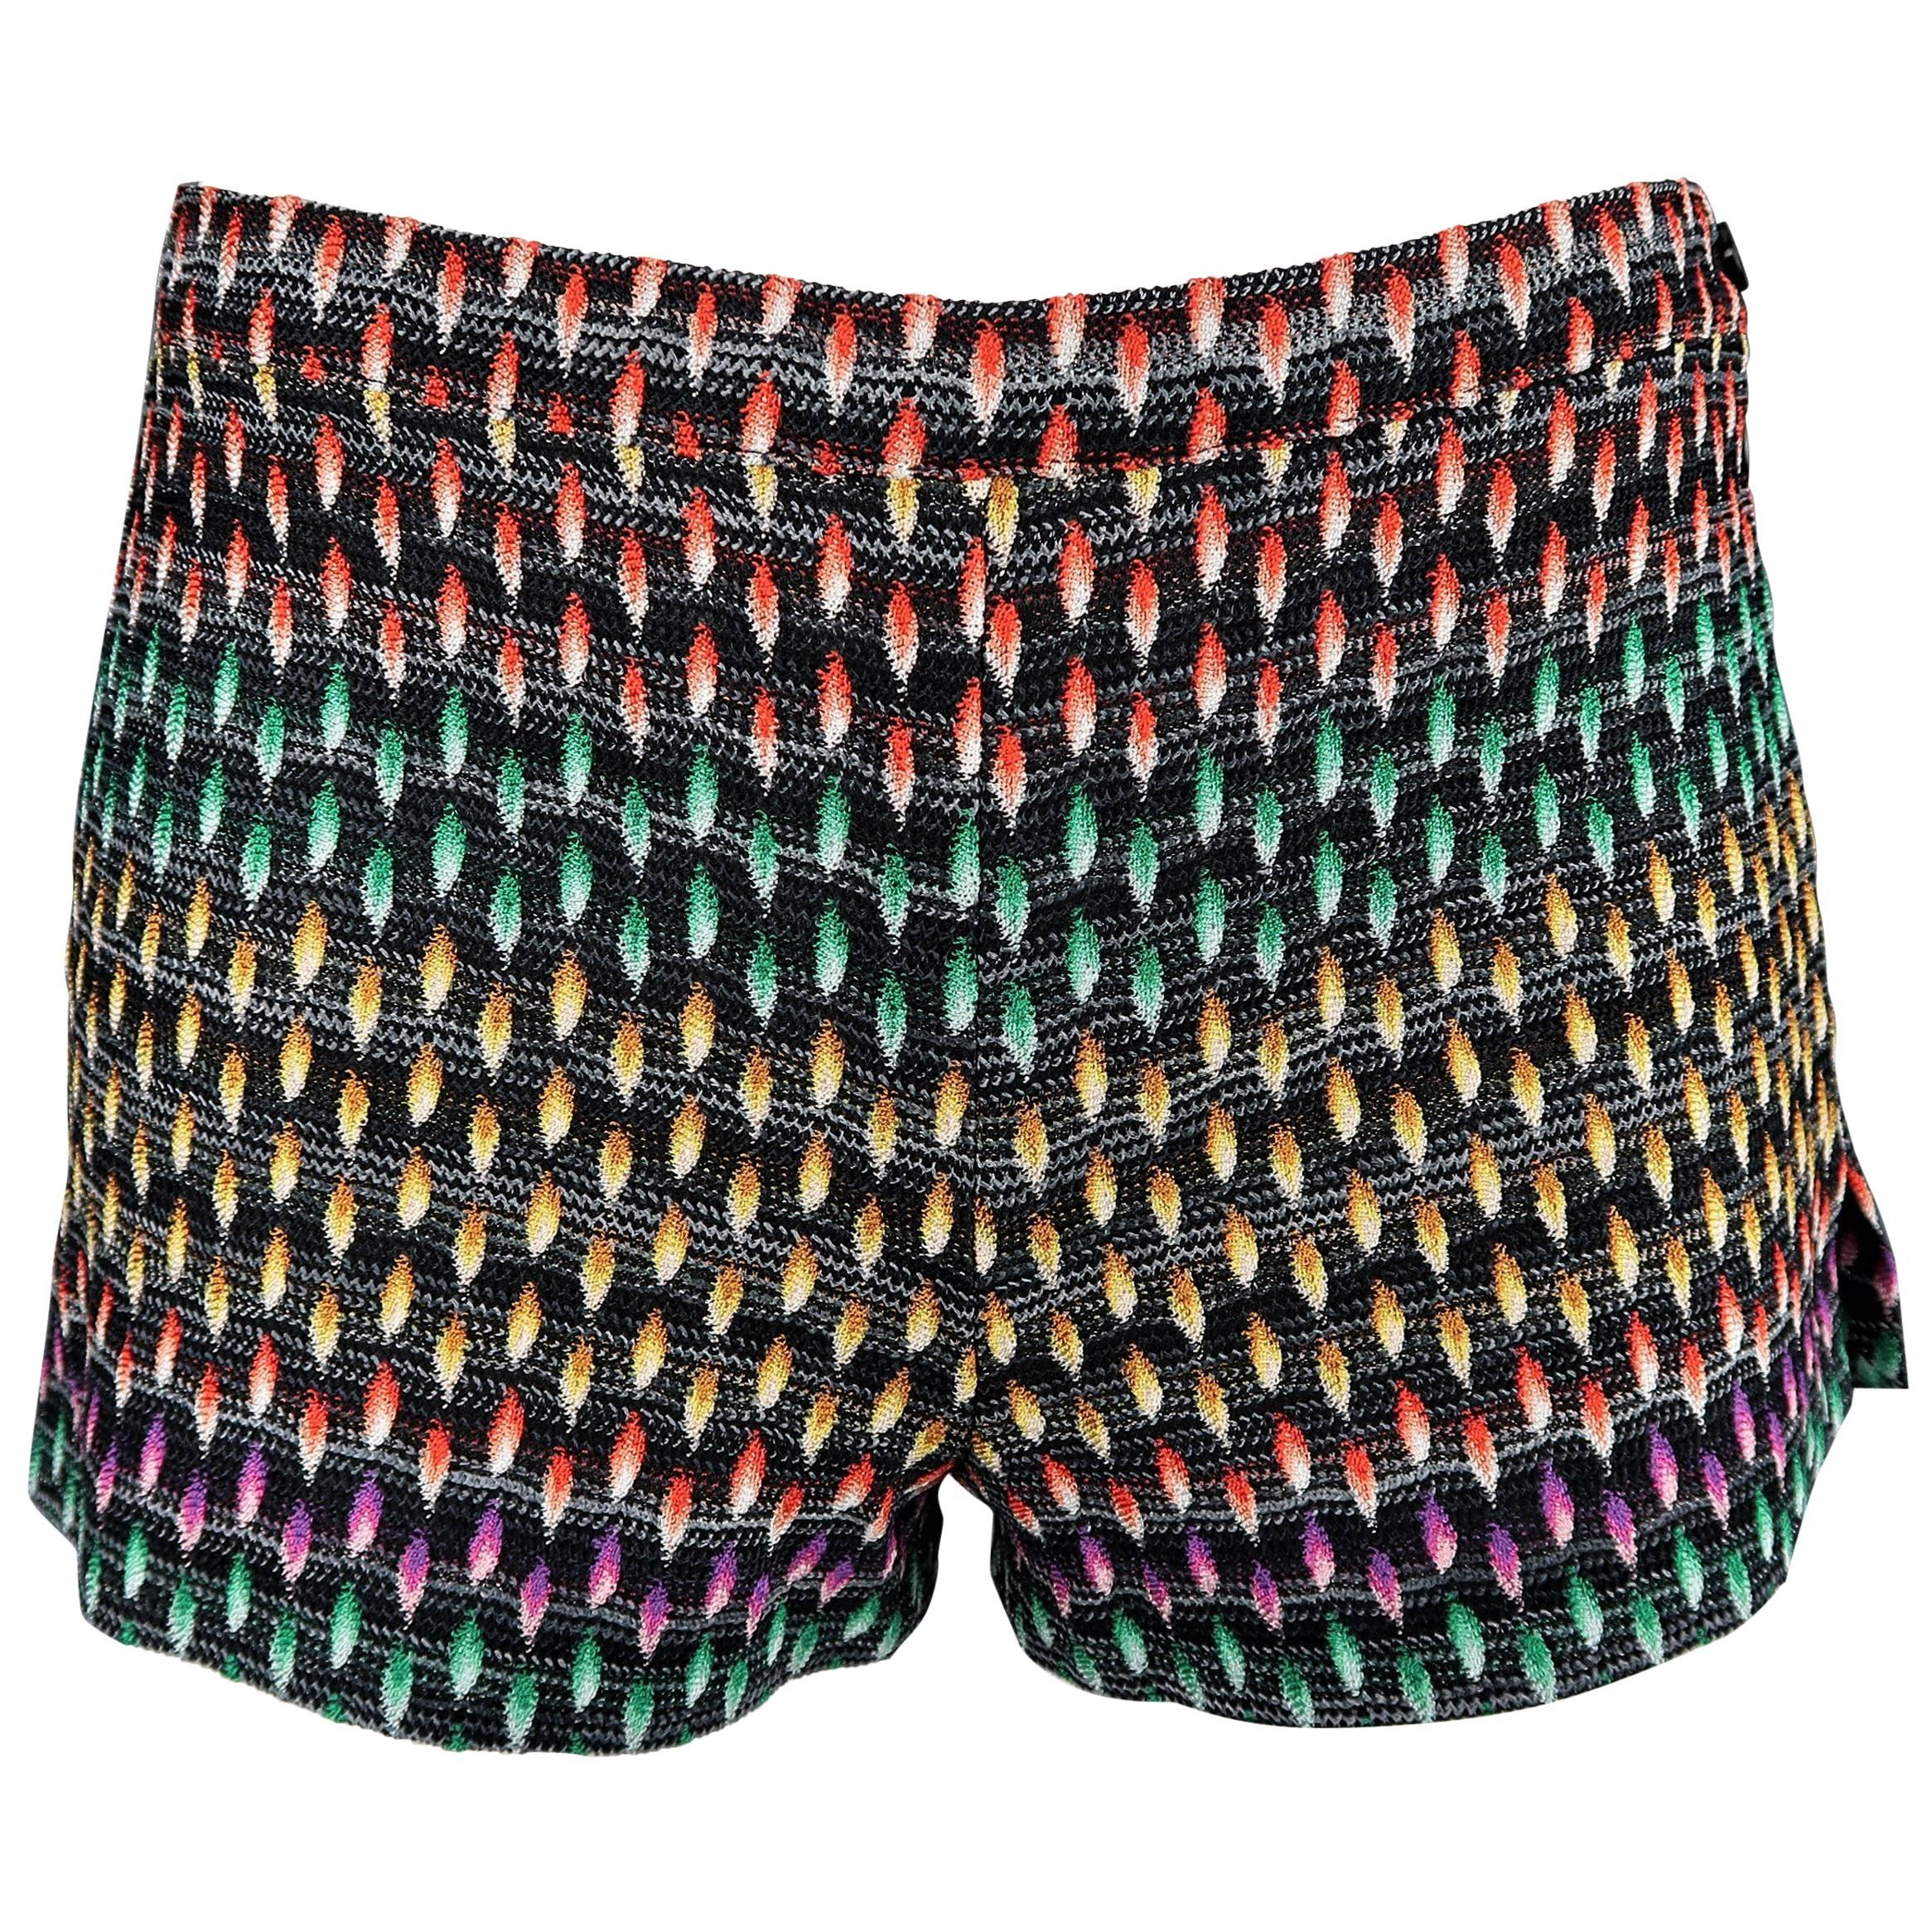 Missoni Black Rainbow Print Silk Knit Short Shorts